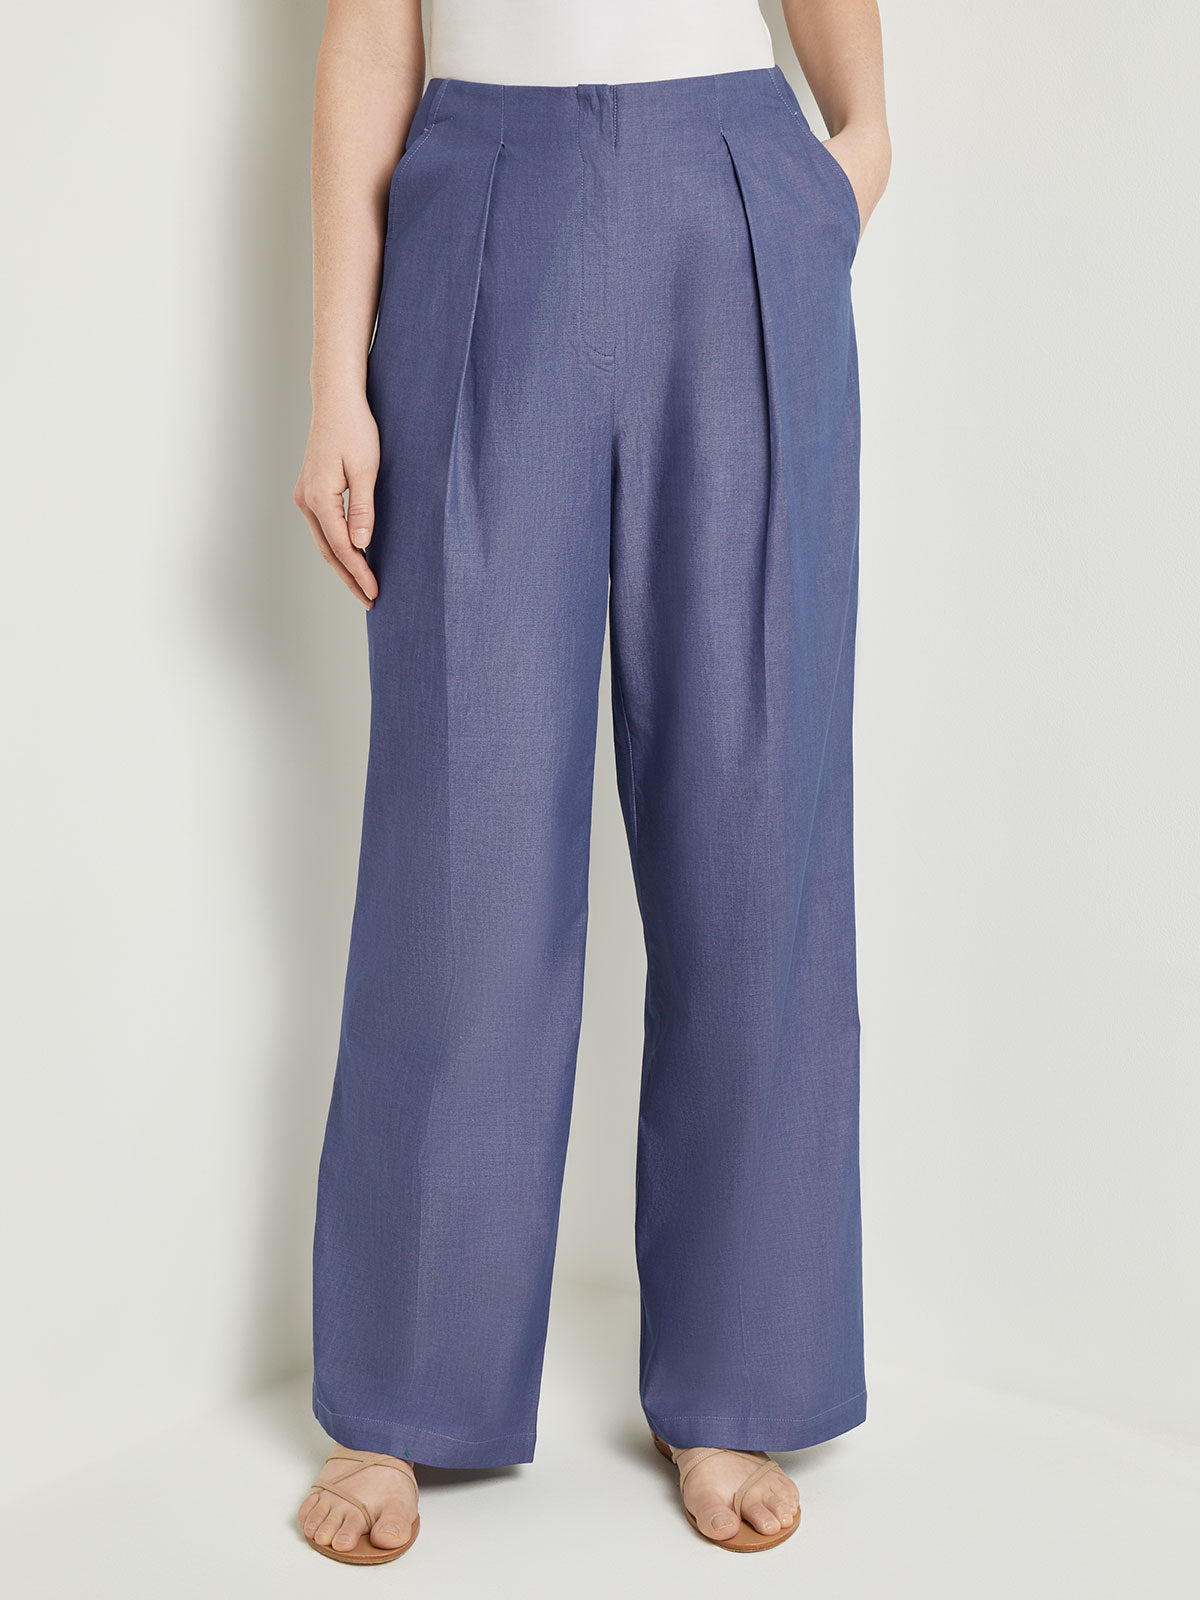 Ladies Button Trousers Casual Loose Bottoms Plain Capri Loungewear Pockets  Mid Waist Cotton Linen Pant Palazzo